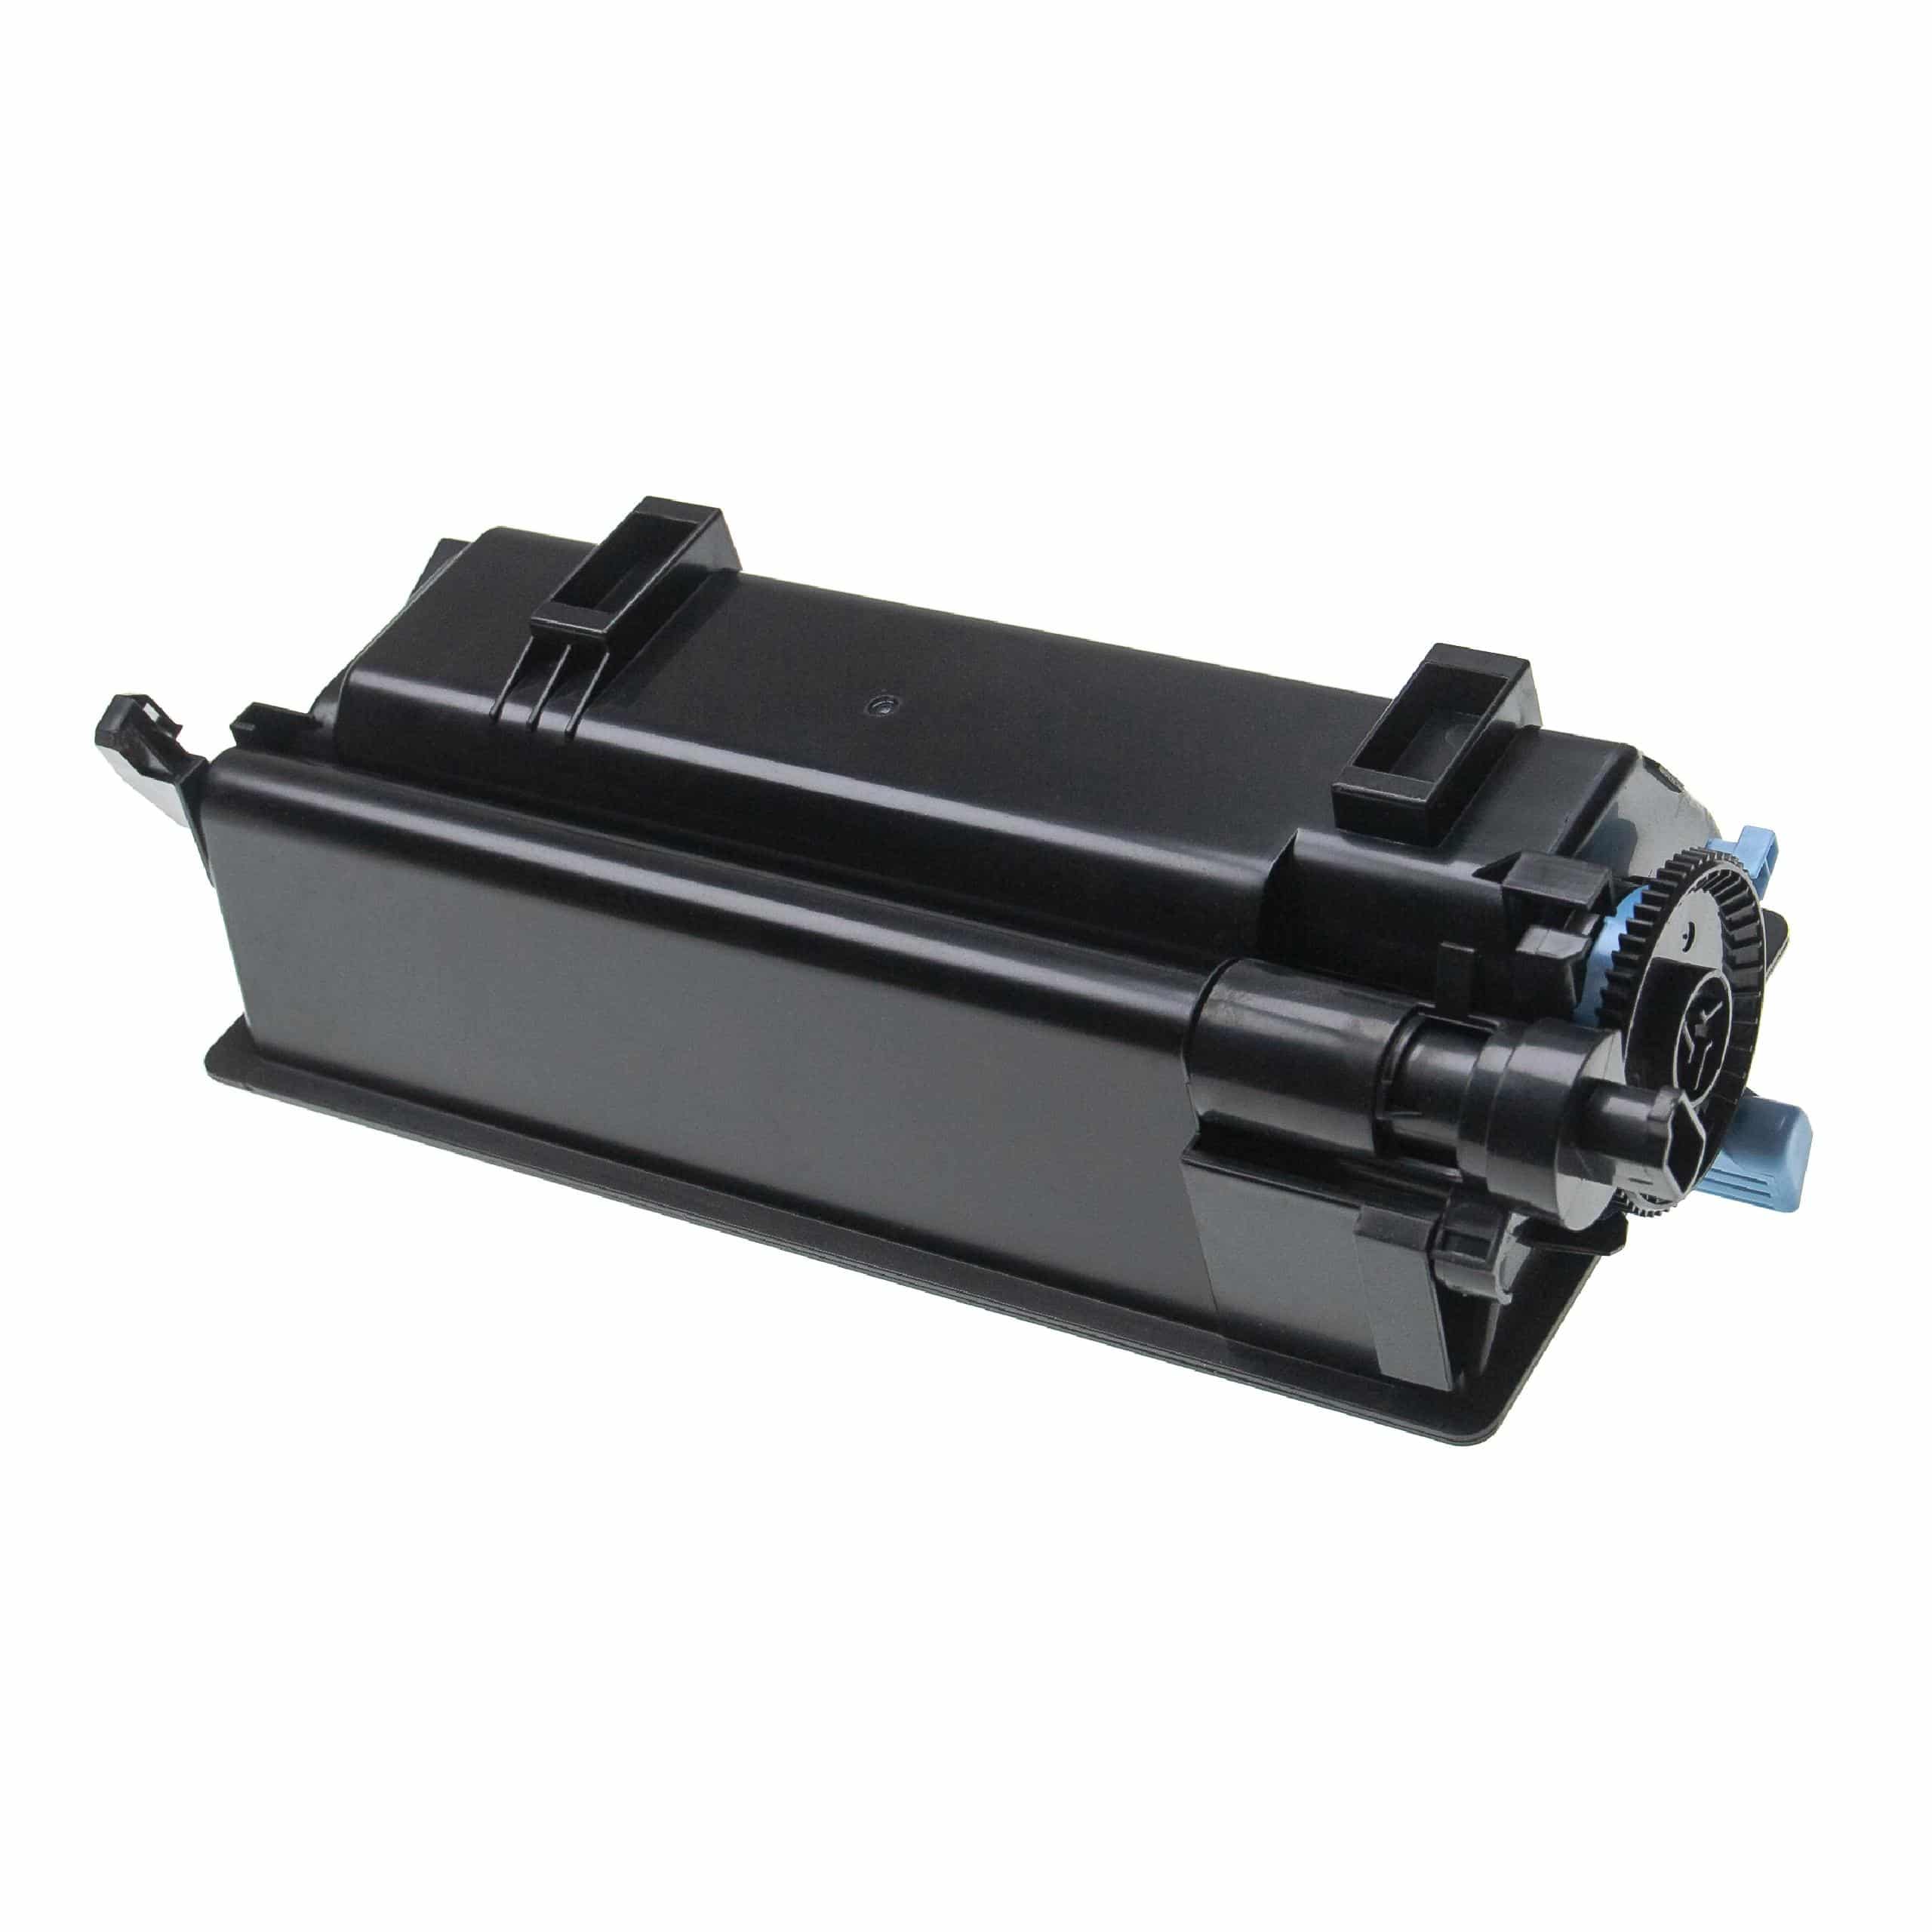 2x Toner replaces Kyocera TK-3160 for Kyocera Printer + Waste Toner Container, Black